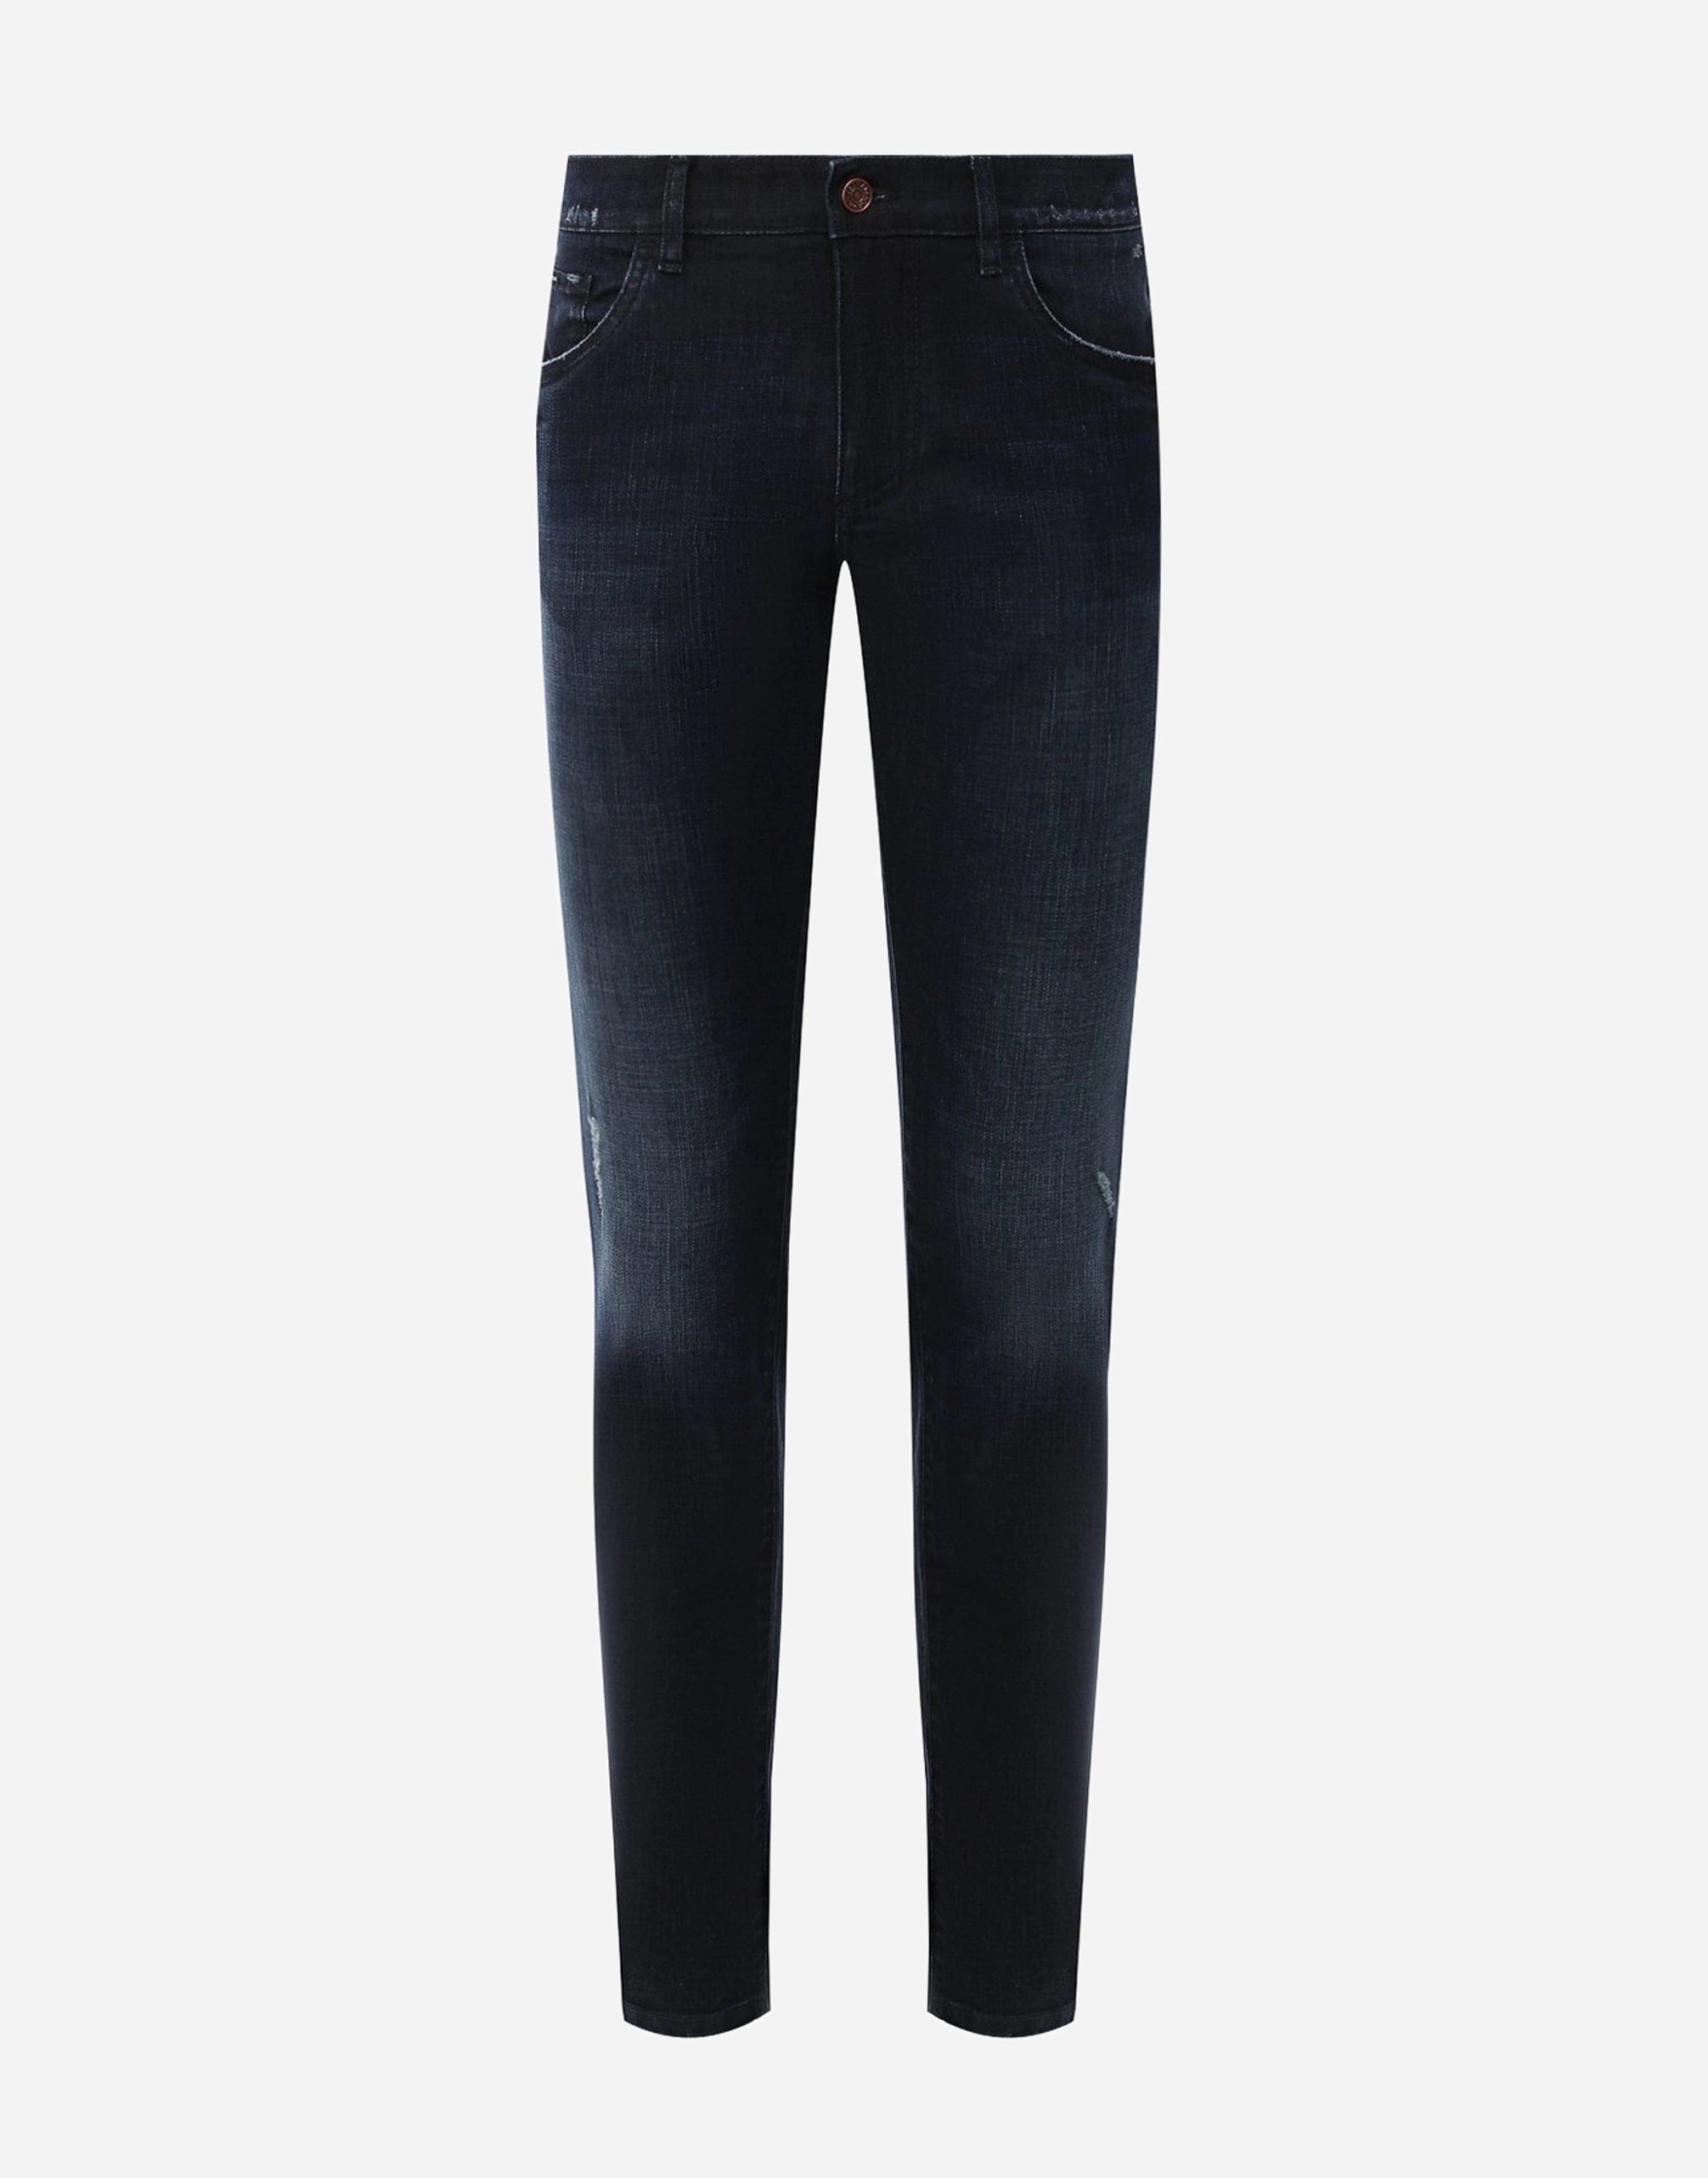 Dolce & Gabbana Dark Blue Cotton Stretch Skinny Denim Jeans